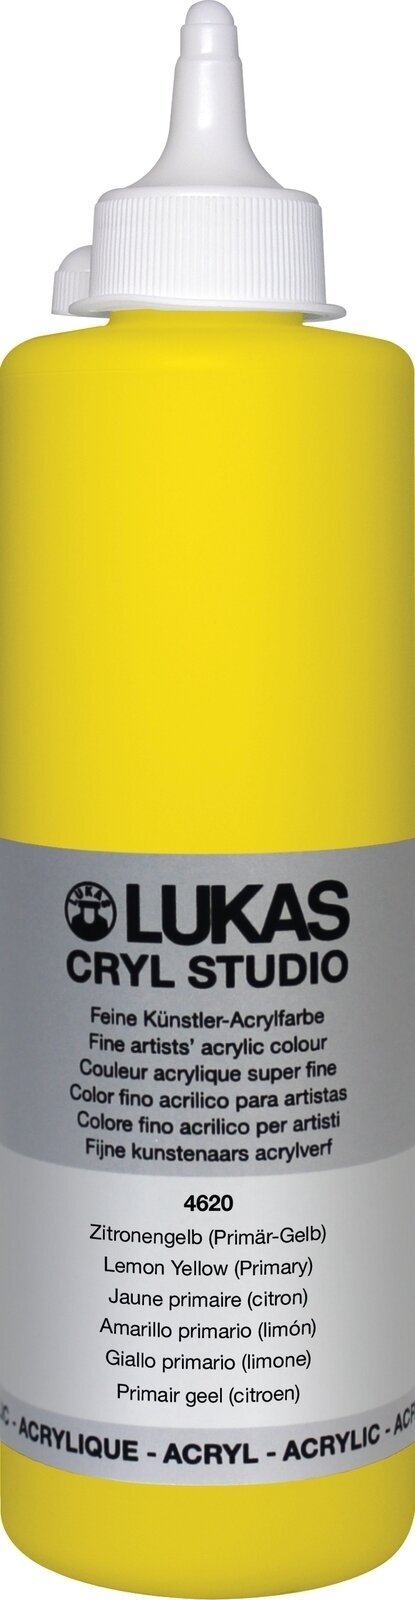 Tinta acrílica Lukas Cryl Studio Tinta acrílica 500 ml Lemon Yellow (Primary)